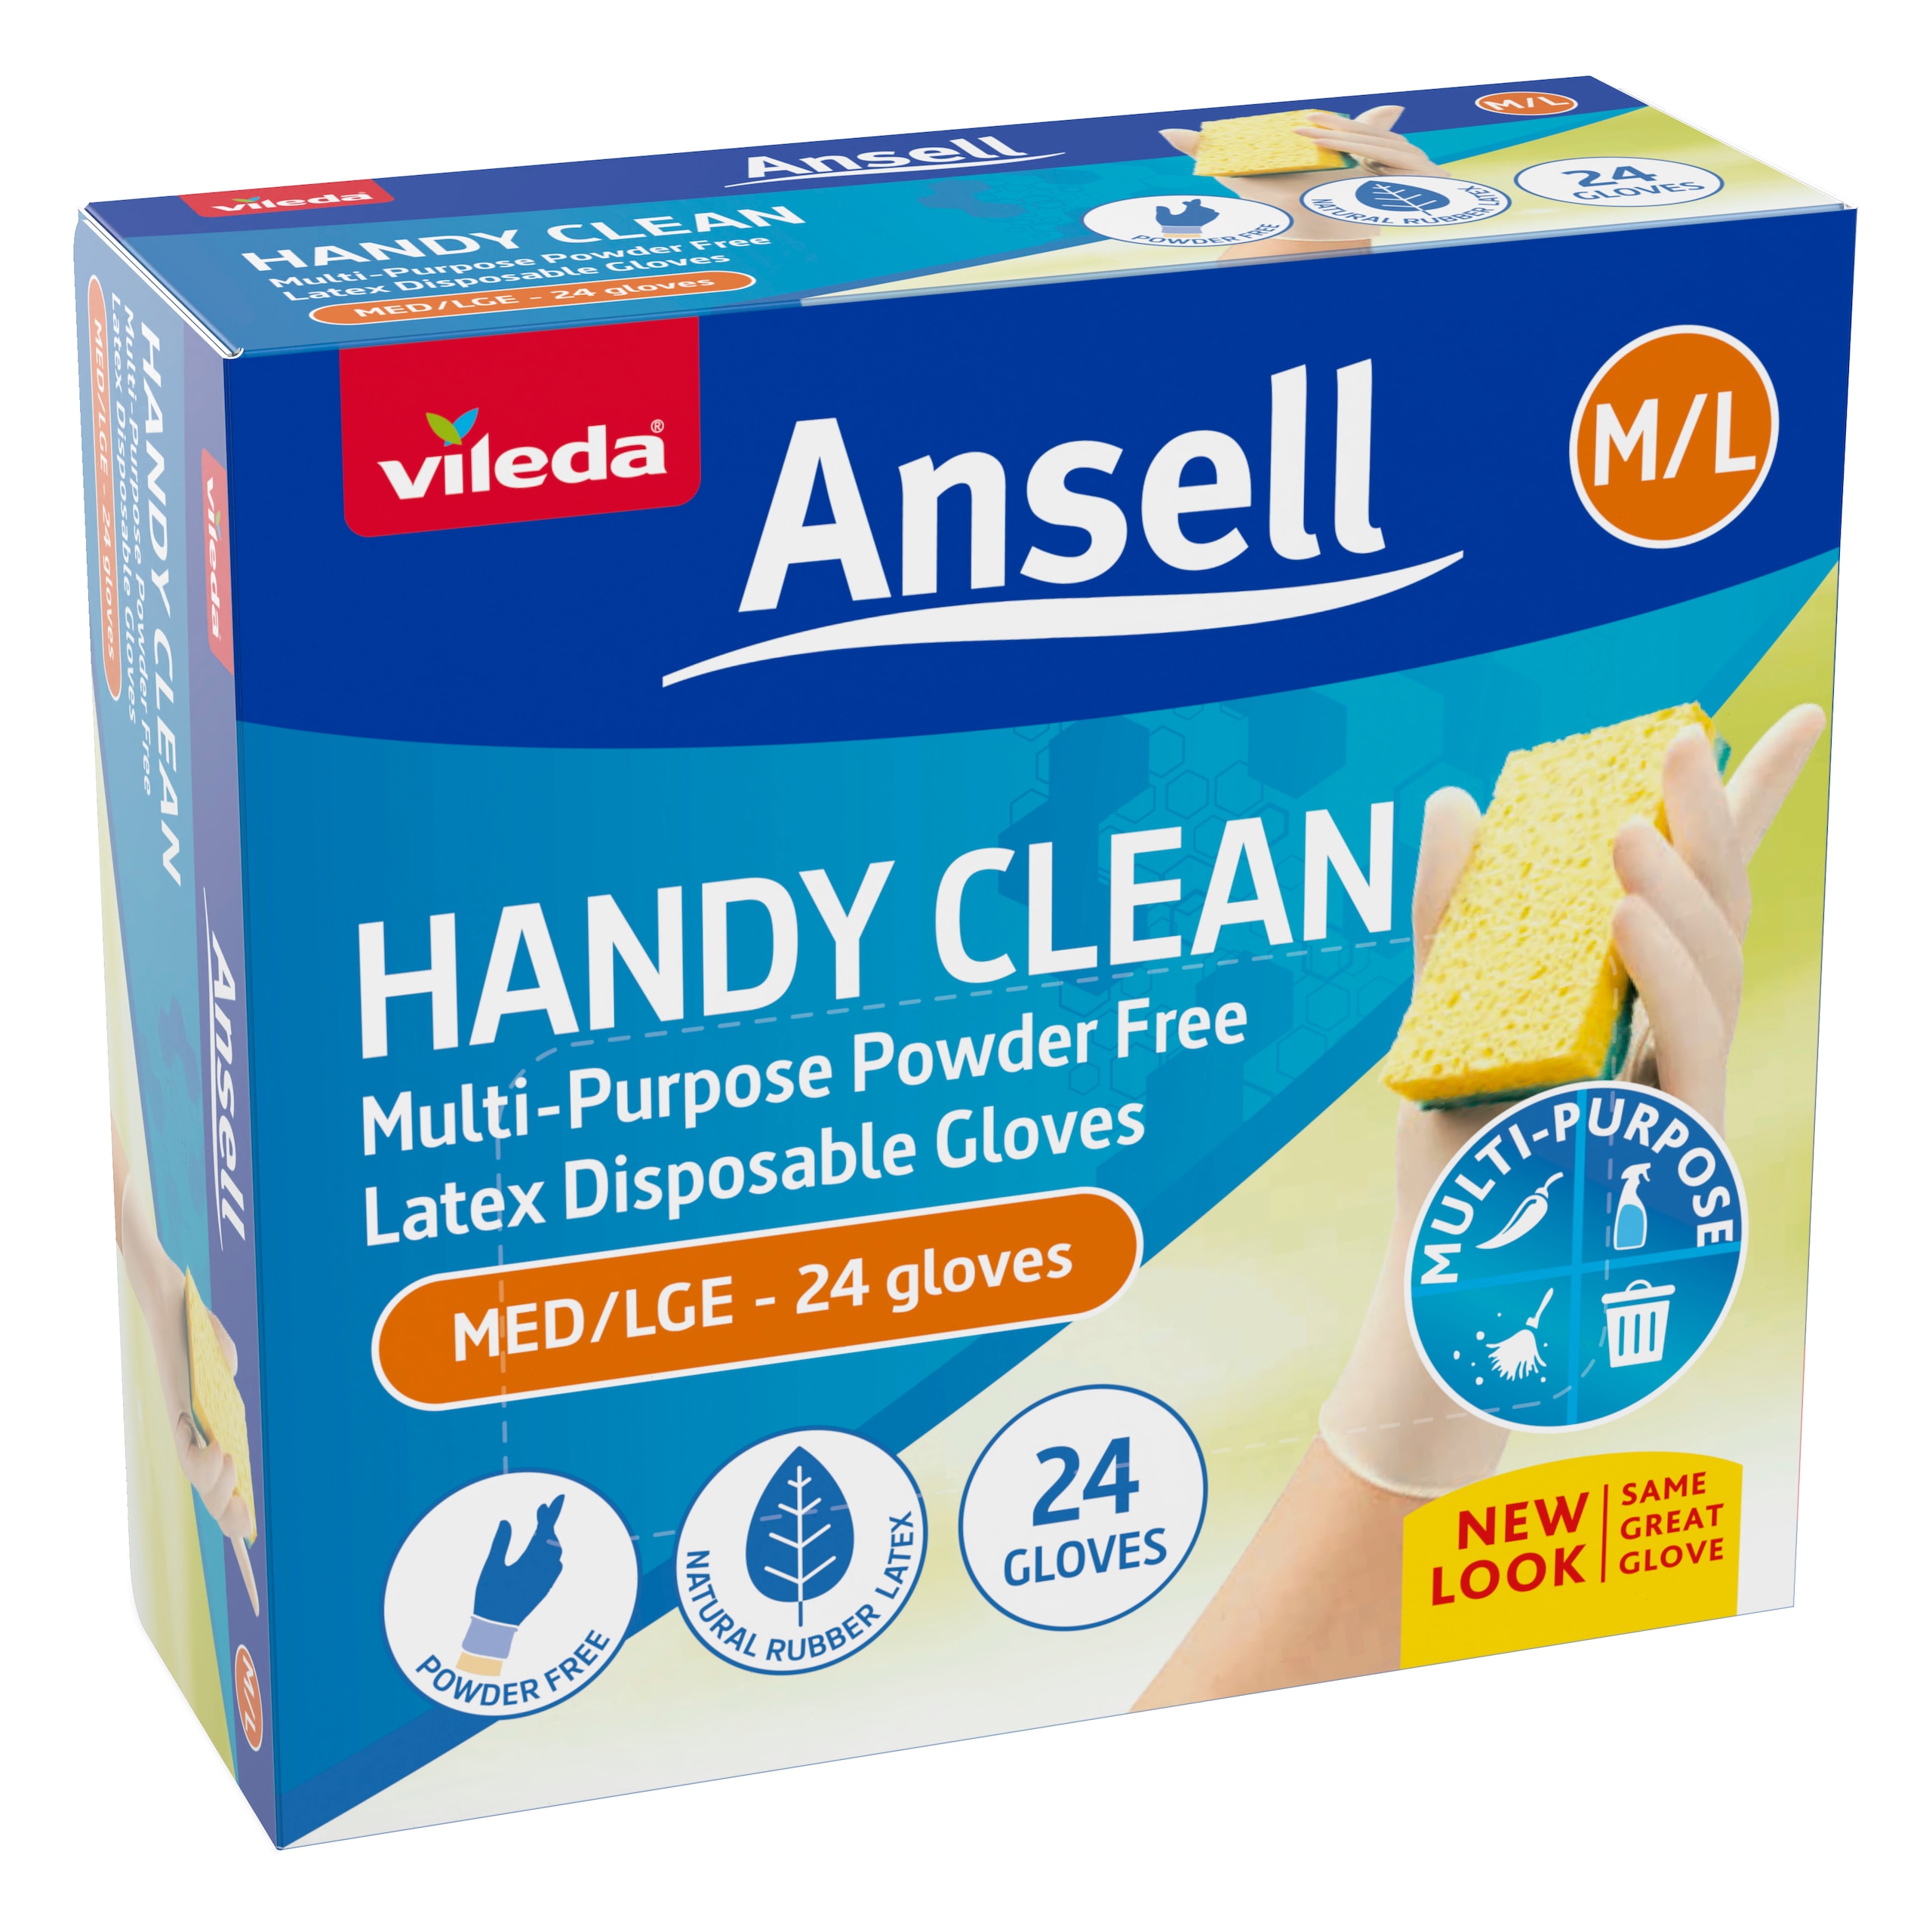 Vileda Ansell Handy Clean Latex Gloves 24-Pack - M/L